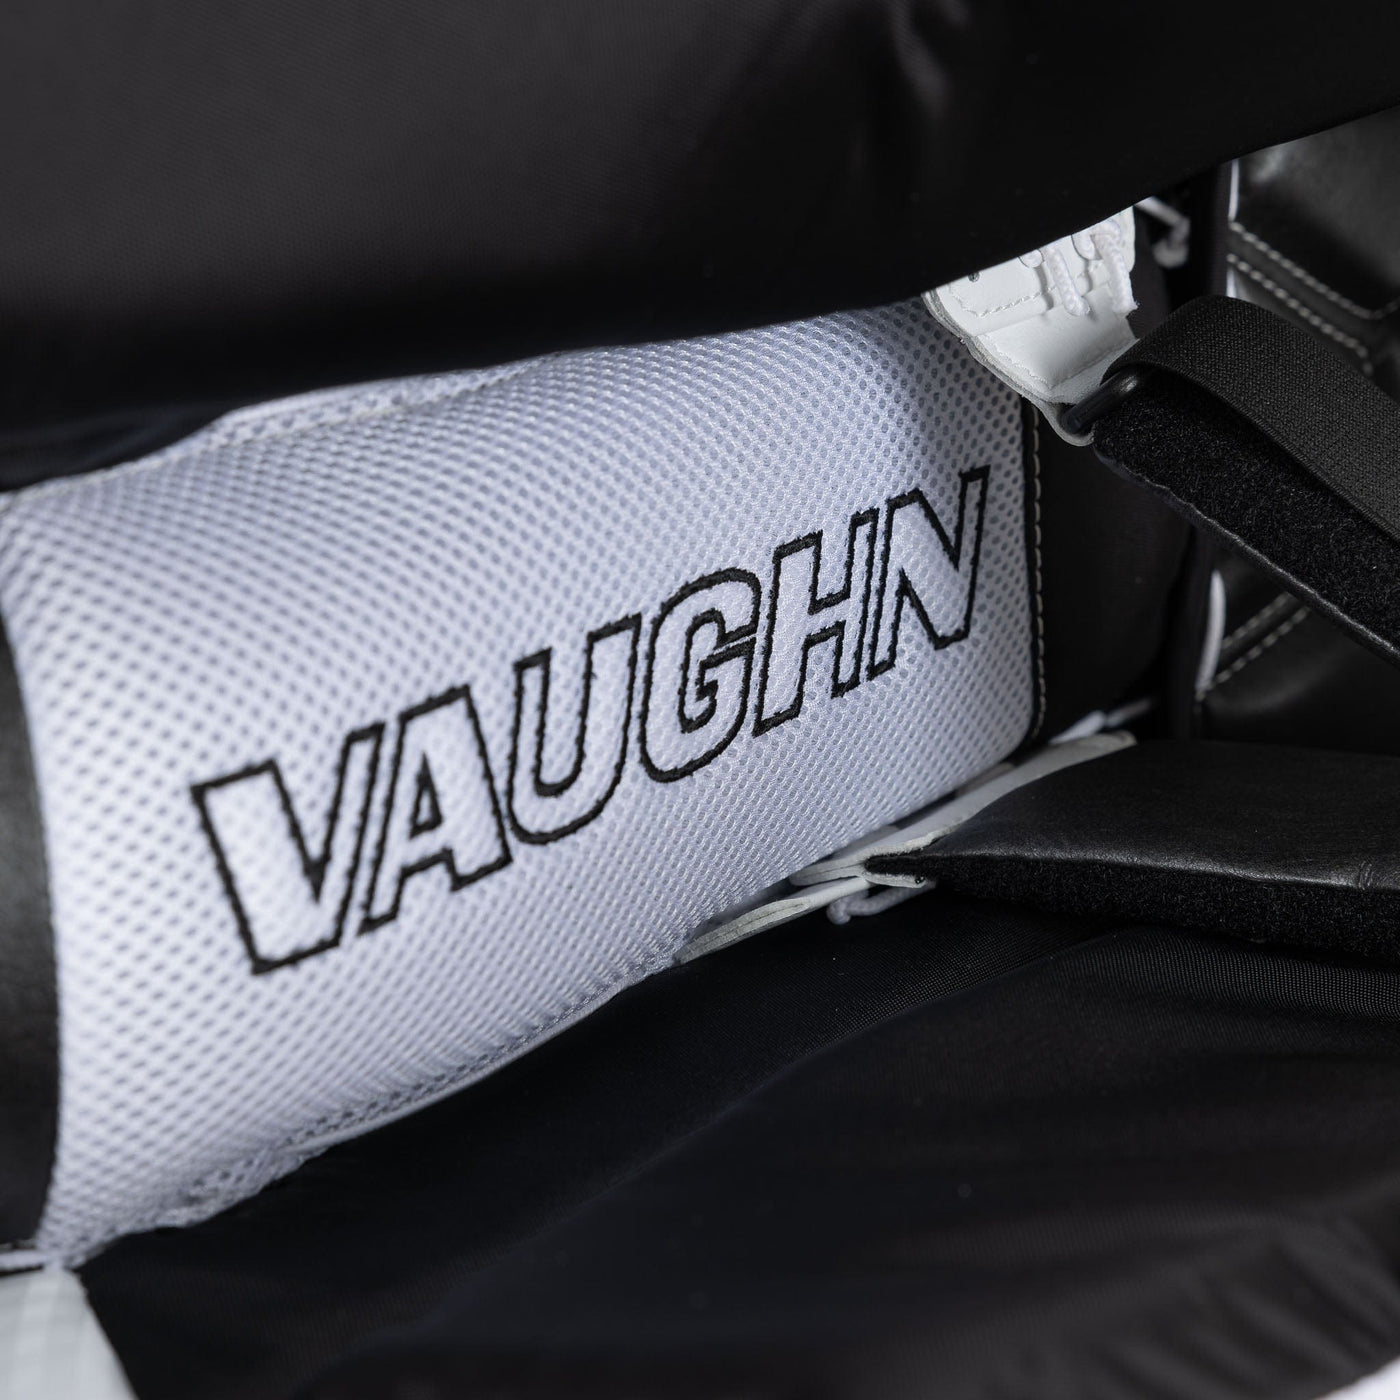 Vaughn Ventus SLR3 Pro Senior Goalie Leg Pads - The Hockey Shop Source For Sports